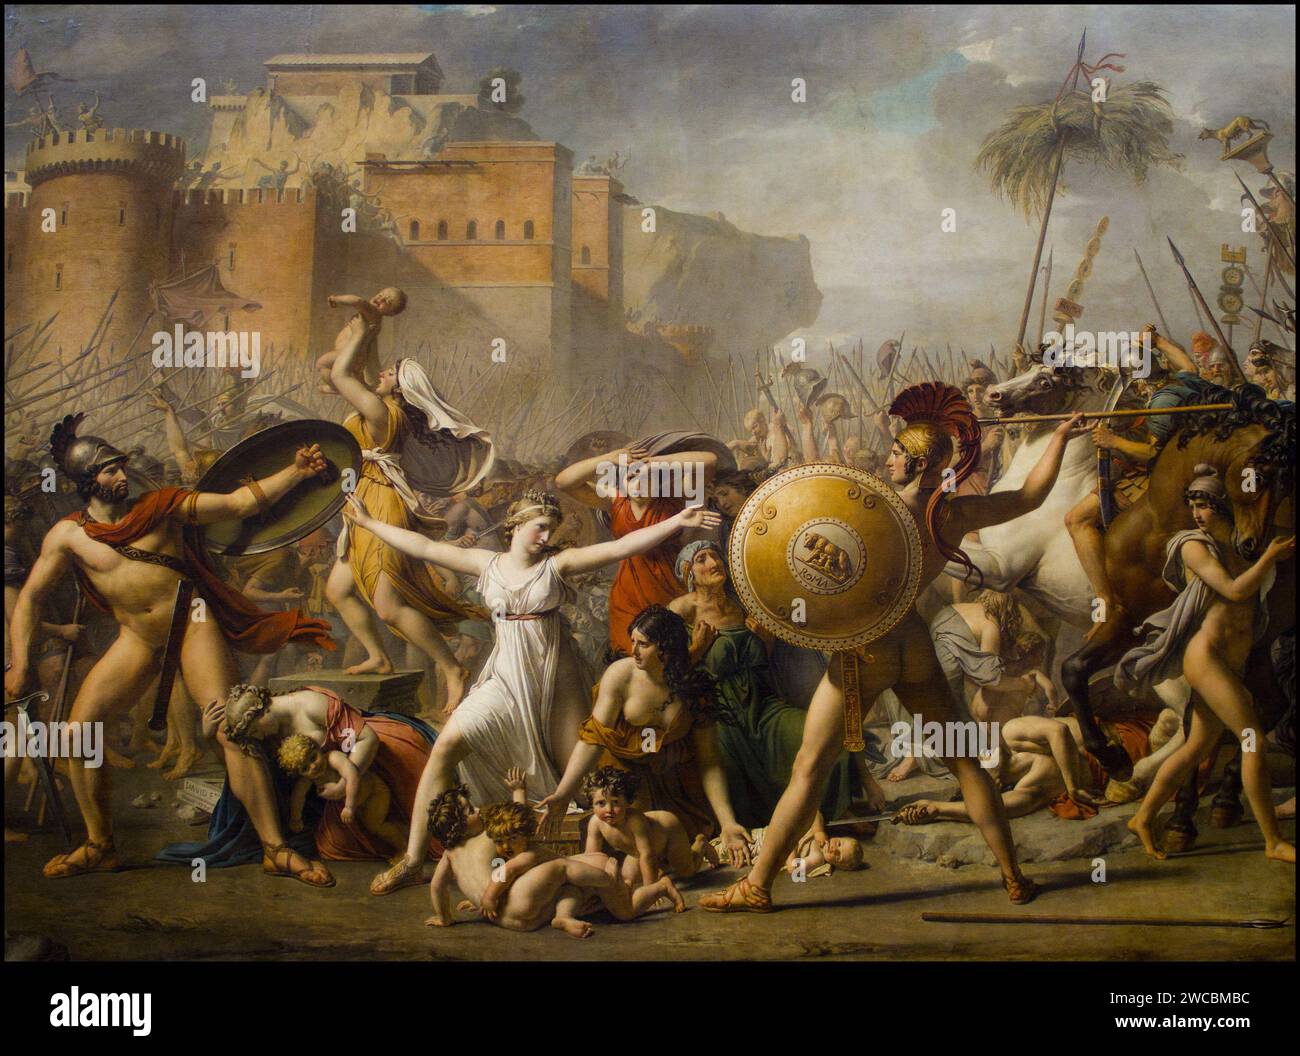 Titel: Les Sabines. The Sabines Künstler: Jacques Louis David Medium: Öl auf Leinwand Abmessungen: 3,85 m x 5,22 m Ort: Louvre Museum Stockfoto